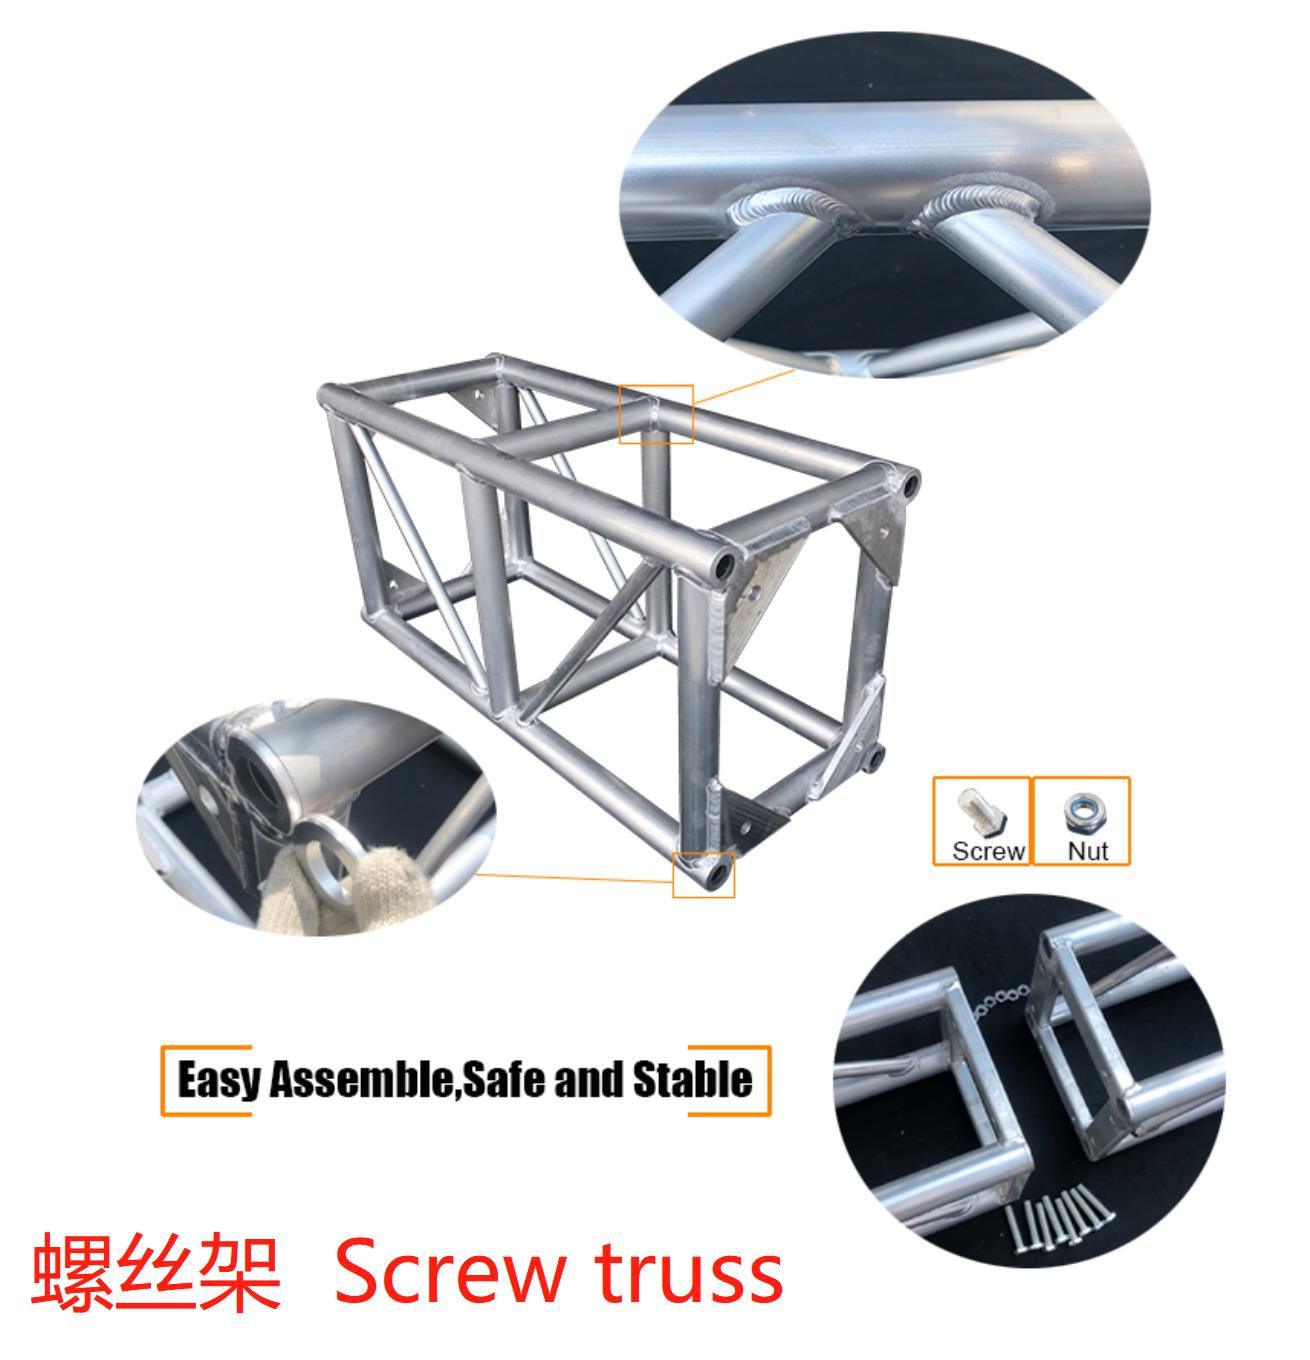 A screw truss